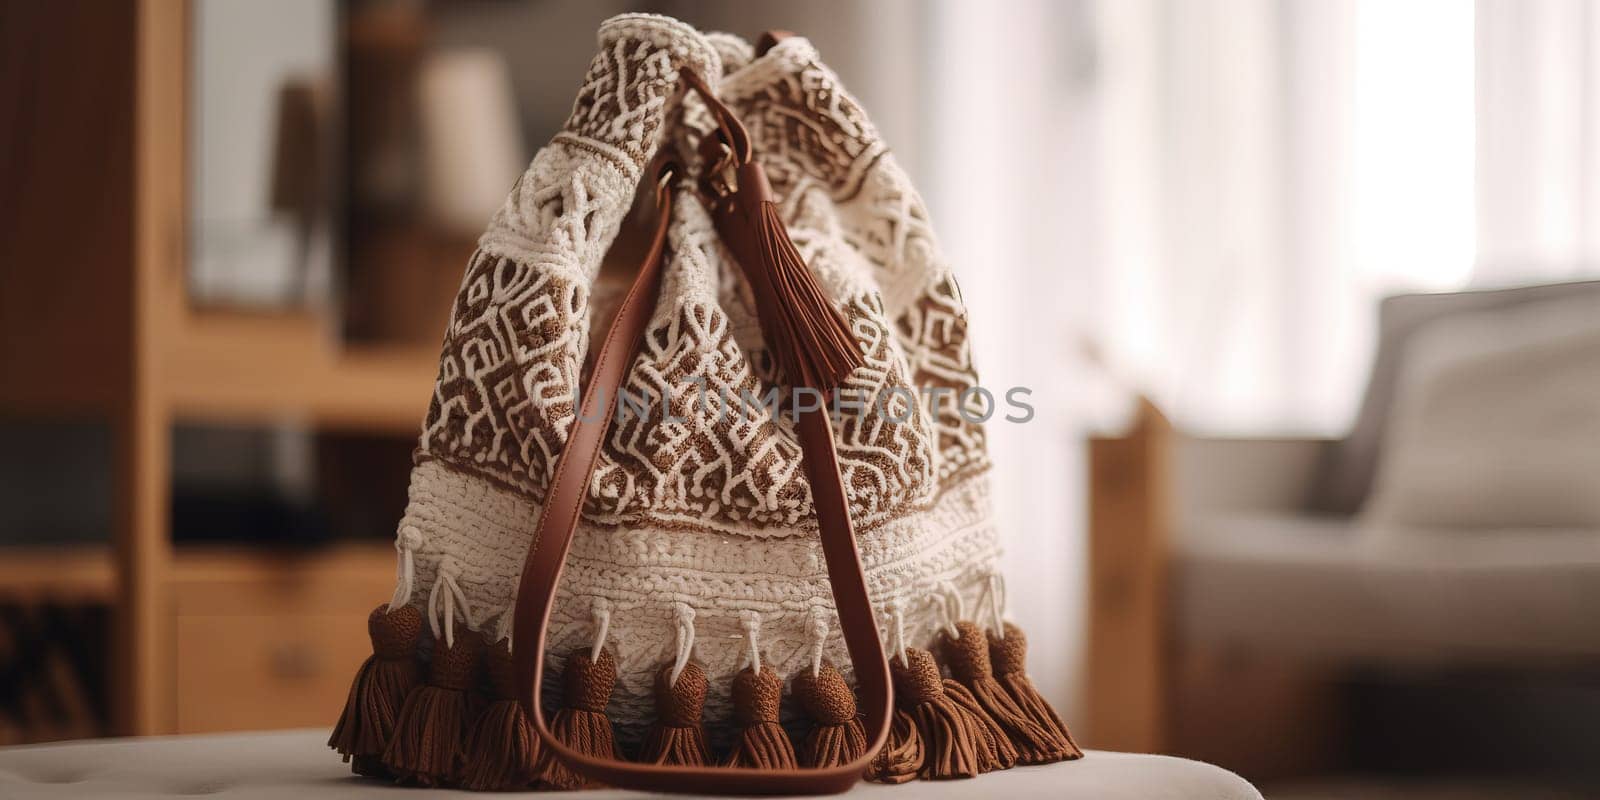 Handmade Boho-Style Fabric Bag On The Table by tan4ikk1